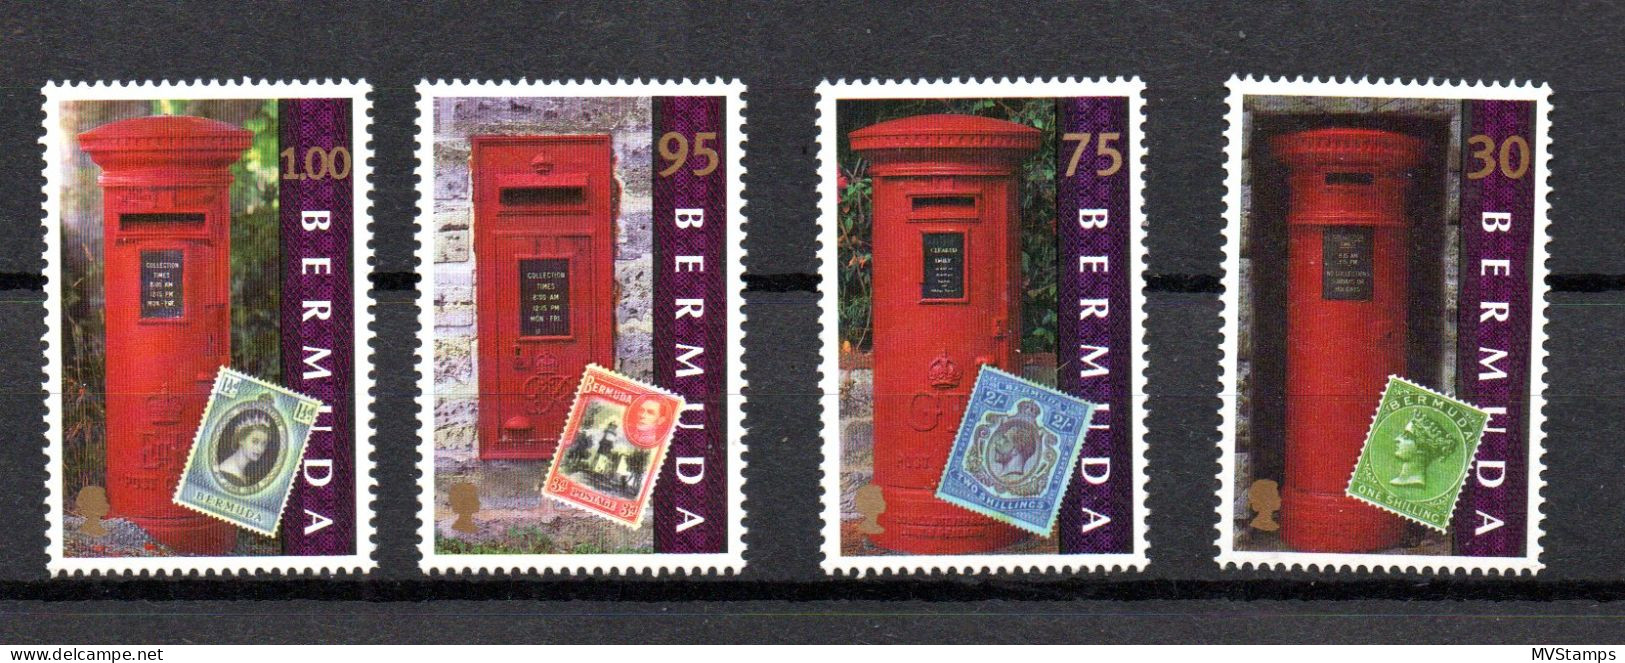 Bermuda 1999 Set Postboxes/UPU Stamps (Michel 768/71) MNH - Bermudes